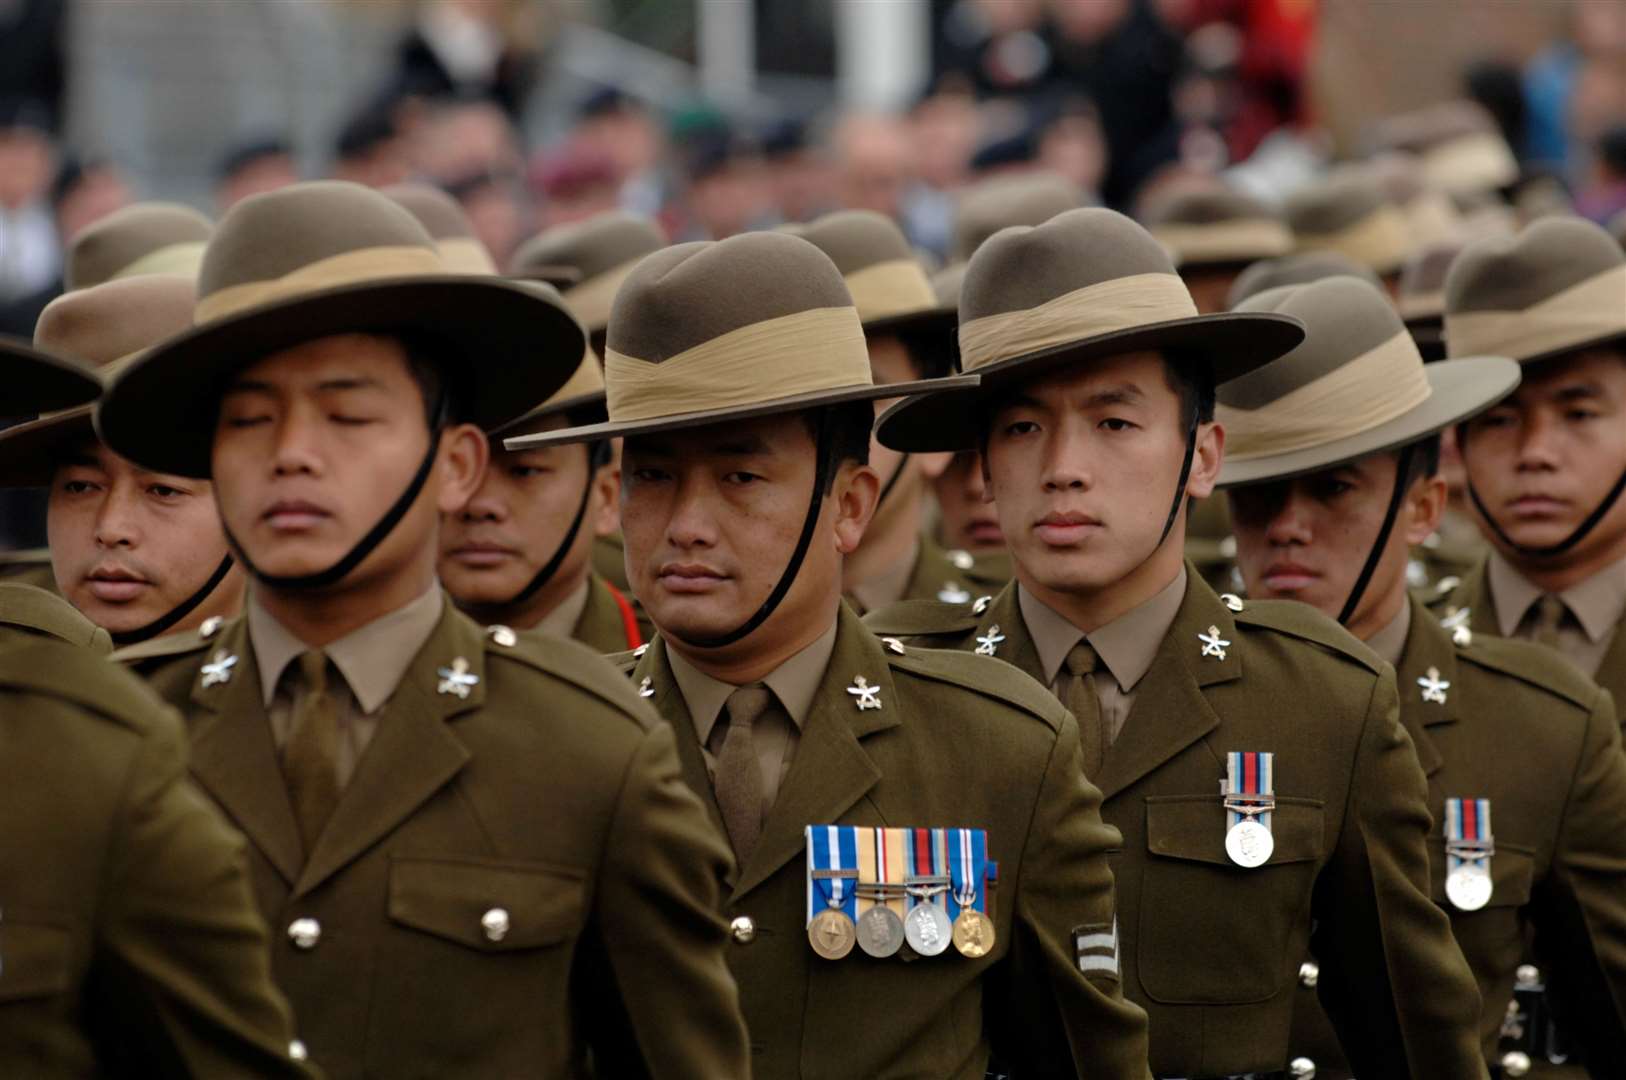 The Gurkhas will form part of the parade